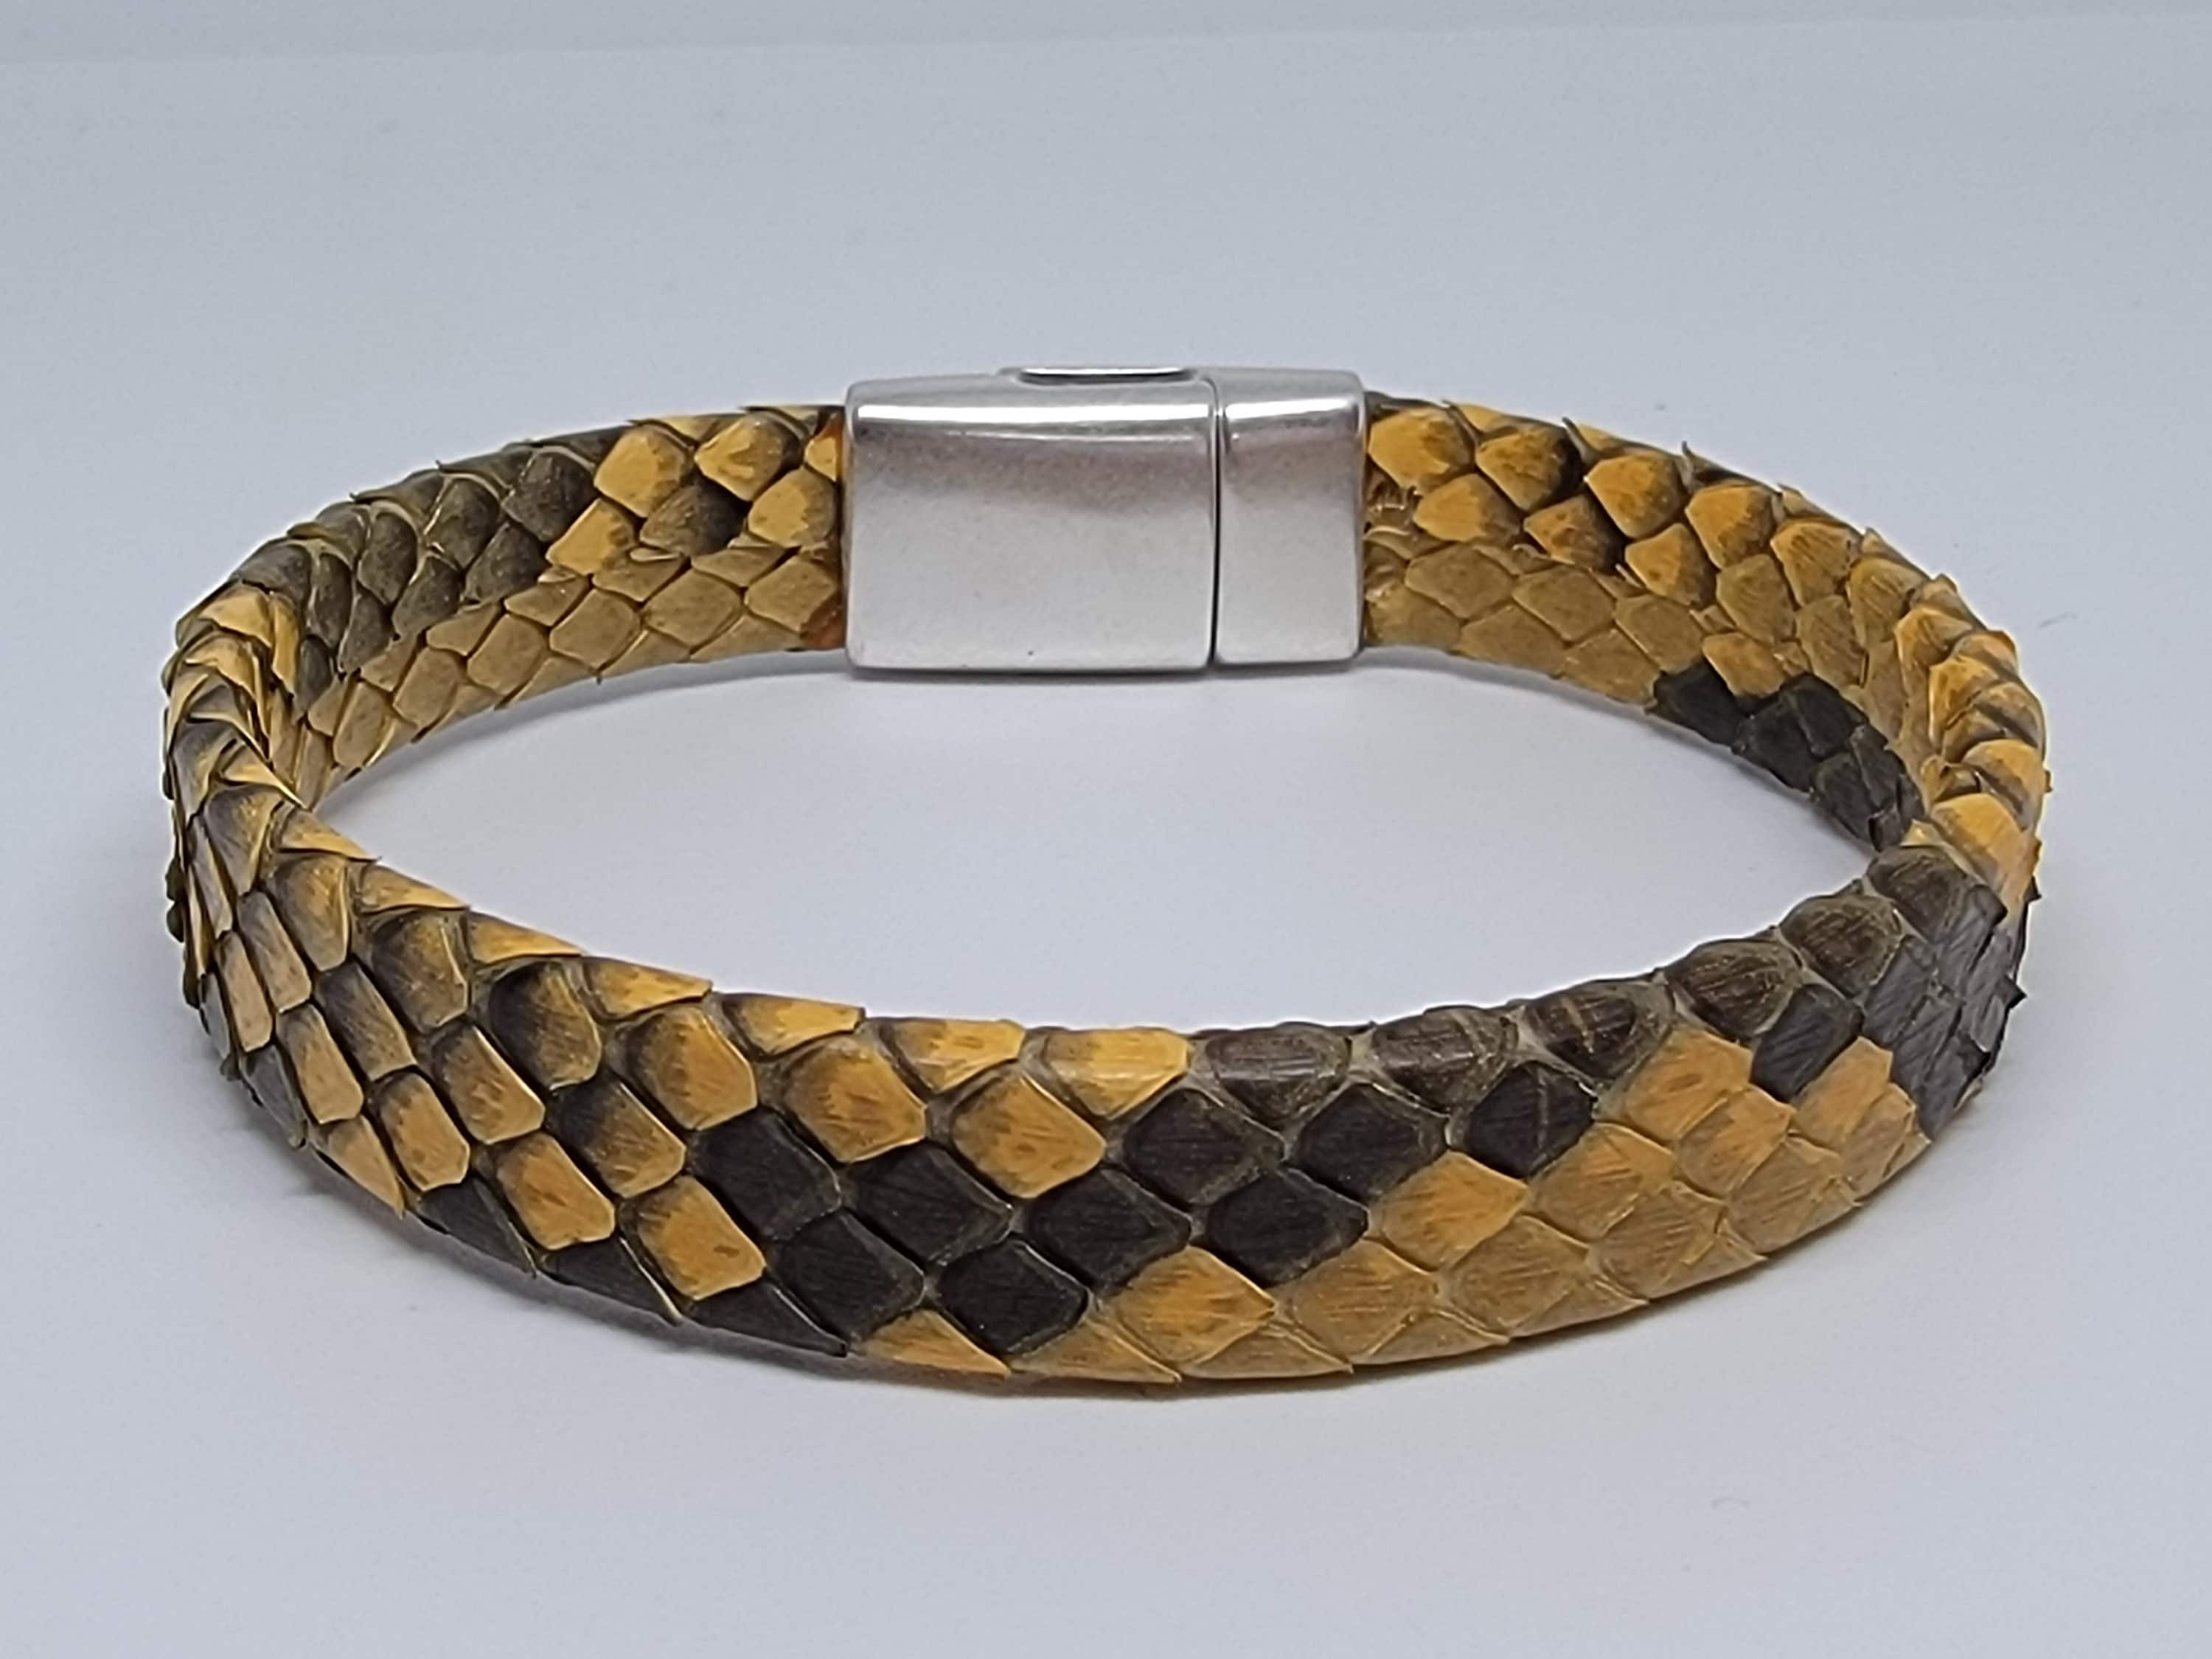 Ursul U-Turn Revolution Black Python Leather Bracelet - Gold, S